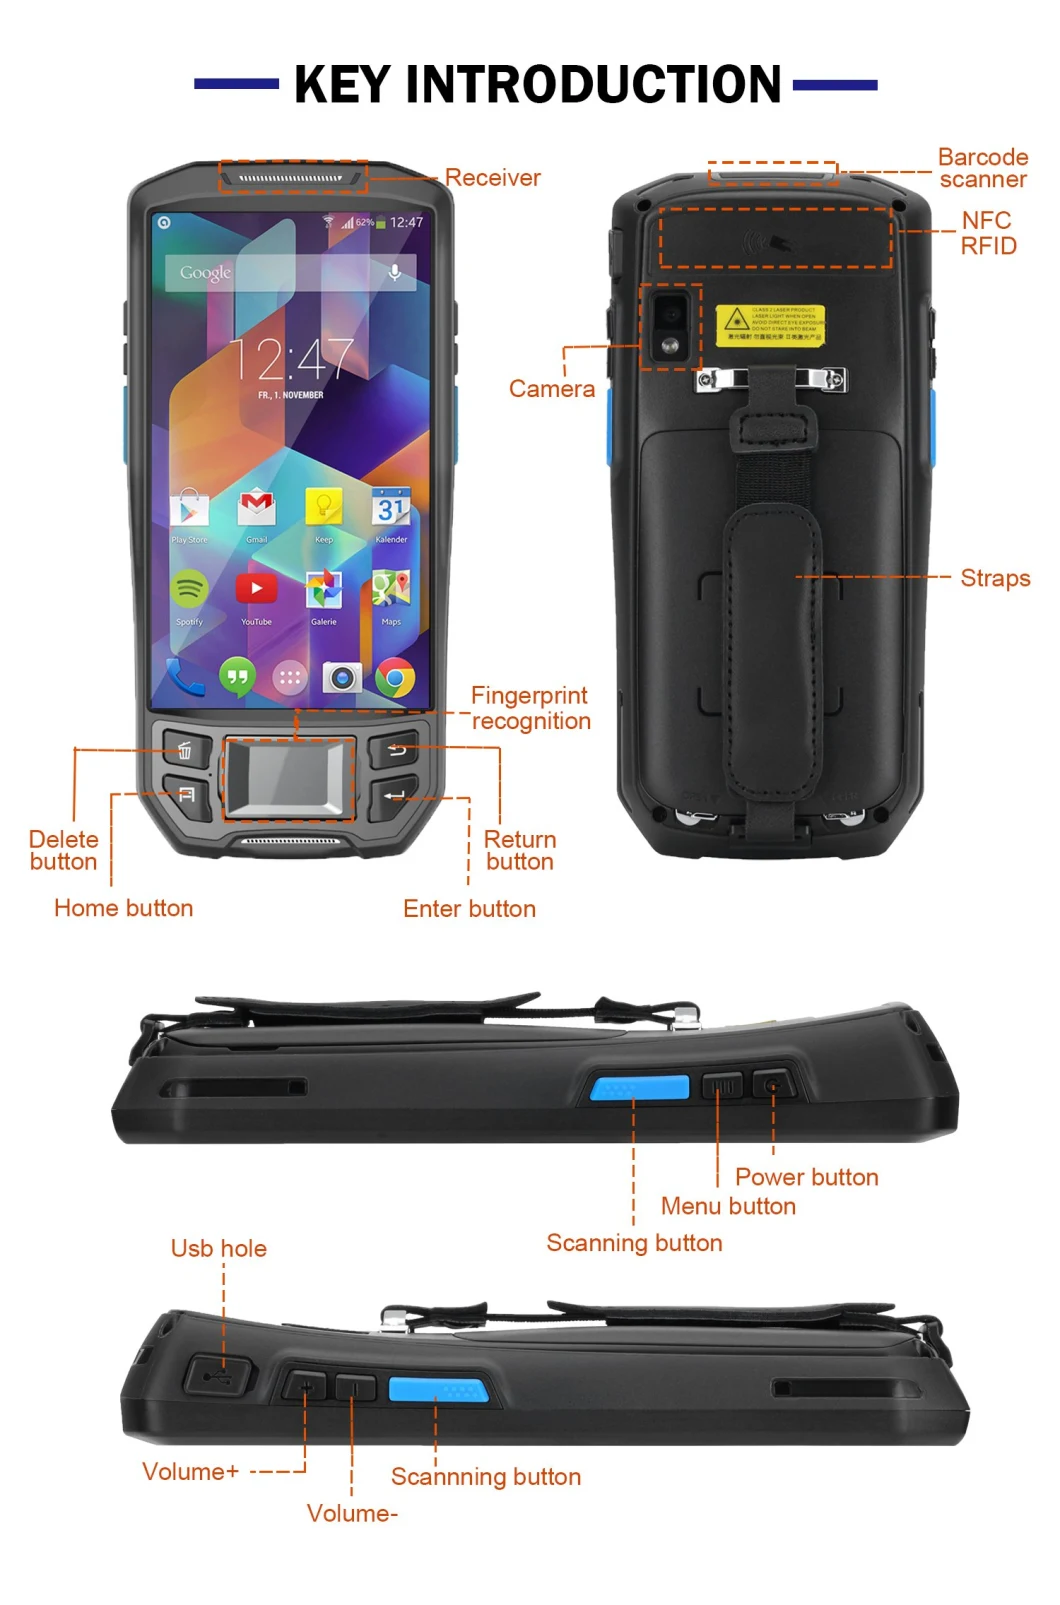 Android Handheld Biometric Portable PDA Fingerprint Reader with 1d 2D Qr Barcode Scanner for Voter Verification